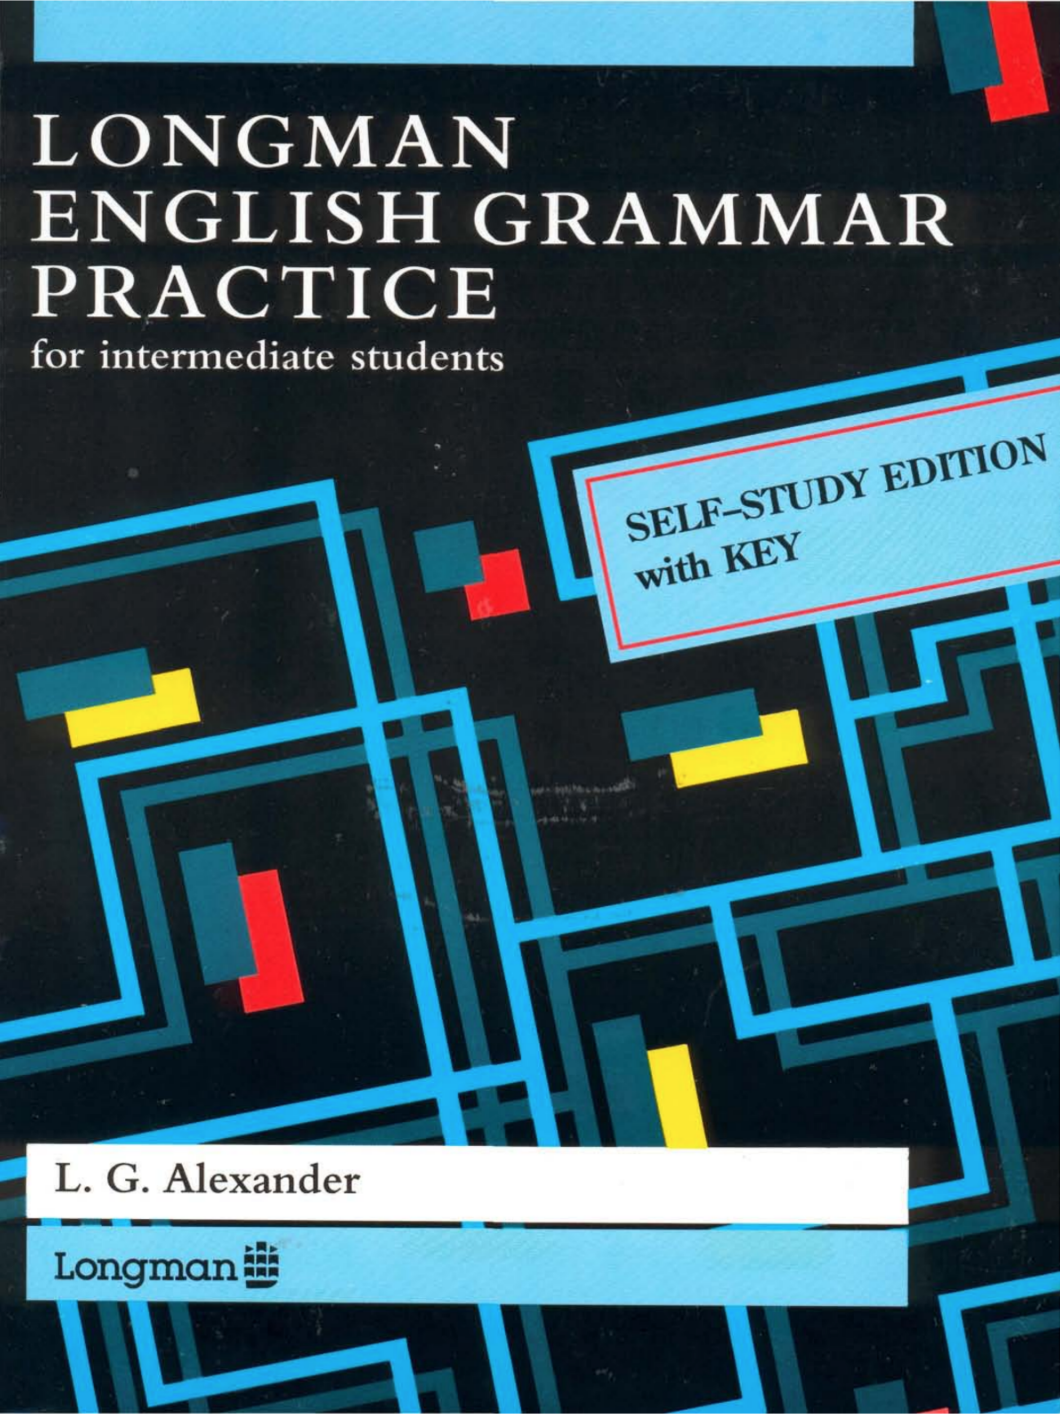 Longman English Grammar Practice With Key (Grammar Reference) by L. G. Alexander